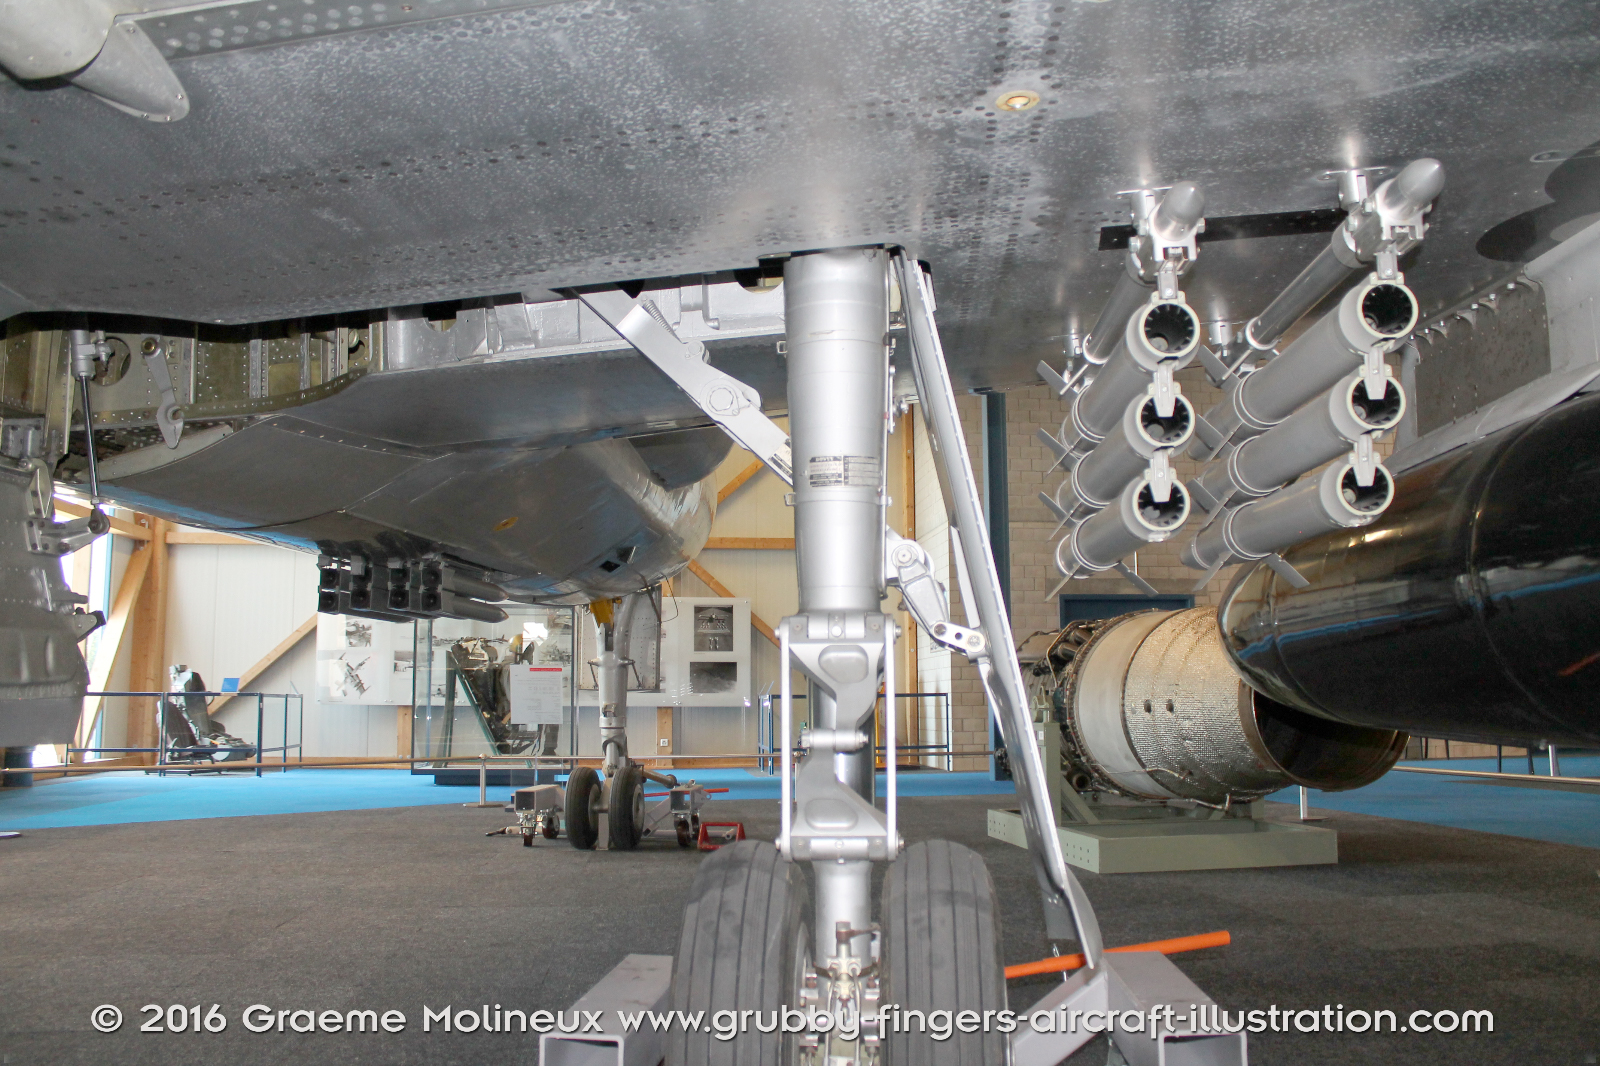 FFA_P-16_X-HB-VAD_Swiss_Air_Force_Museum_2015_34_GrubbyFingers